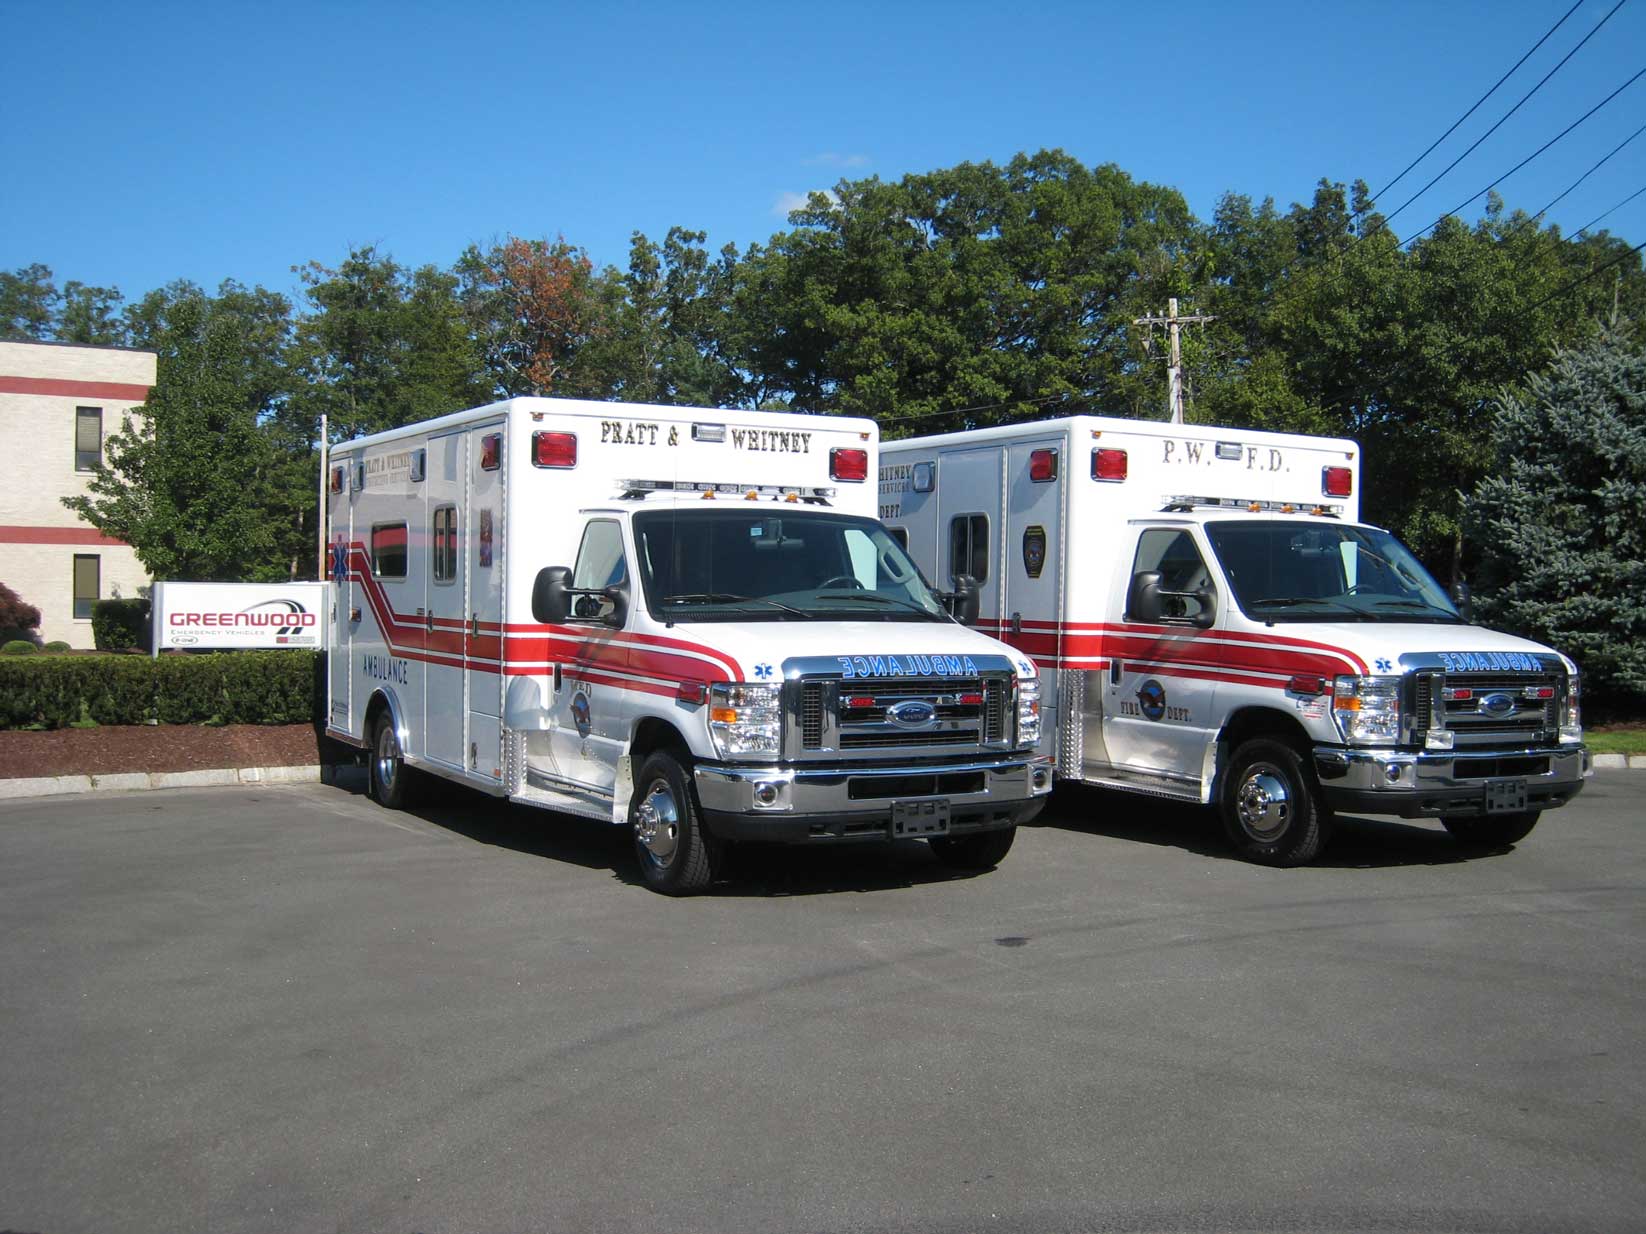 Pratt & Whitney, E. Hartford / Middletown - Horton Type III Ambulance's